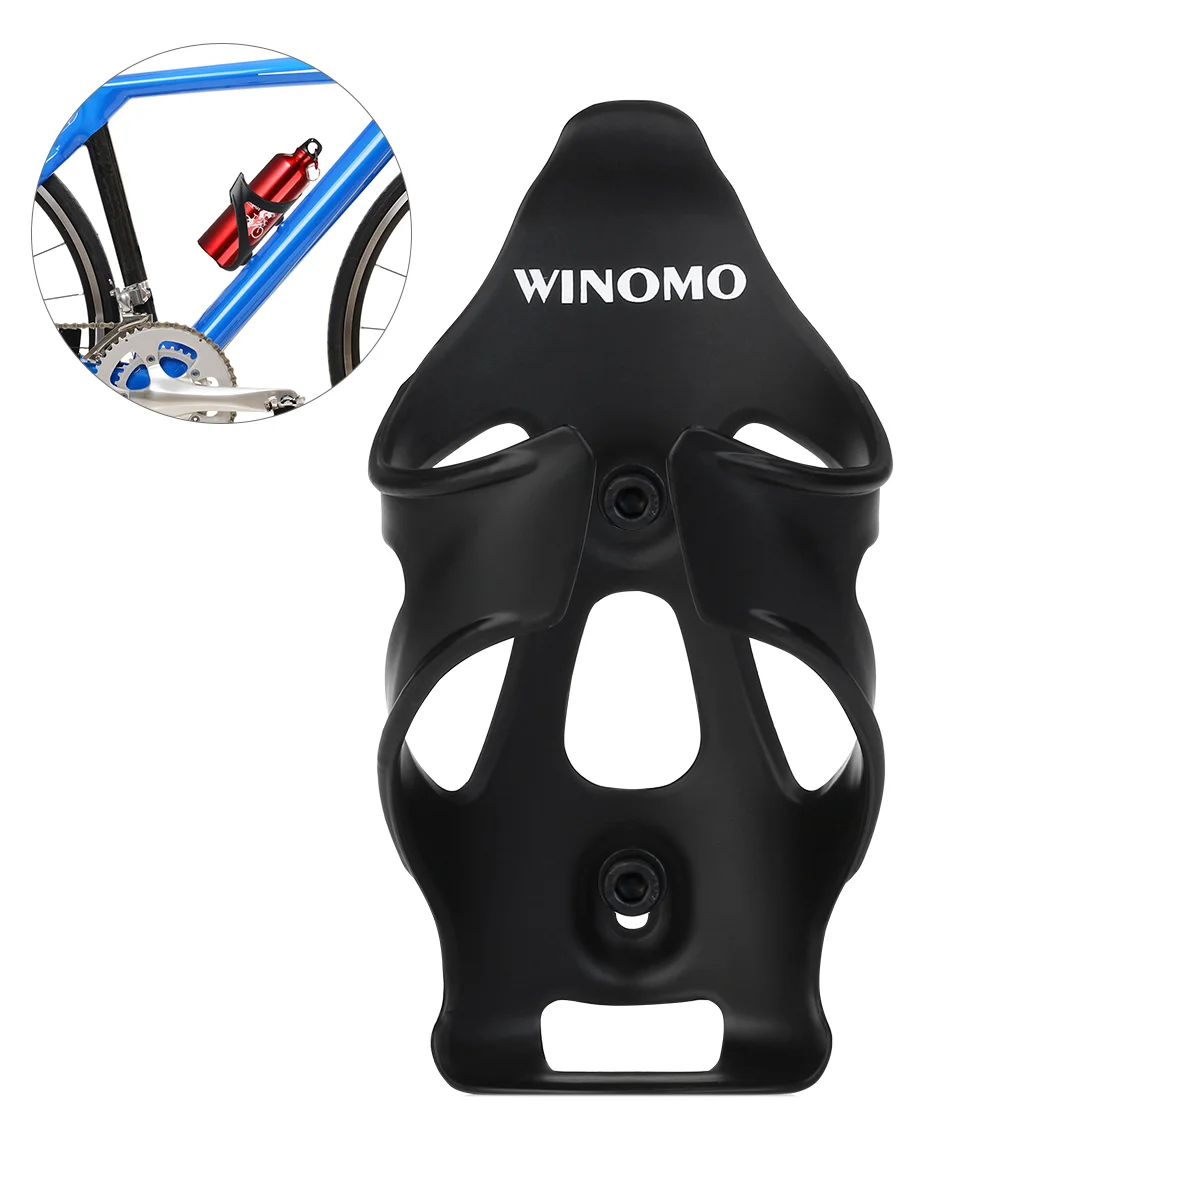 

WINOMO Accessory Nylon Fibre Cycling Bike Water Bottle Holder Cage Rack for MTB (Black)